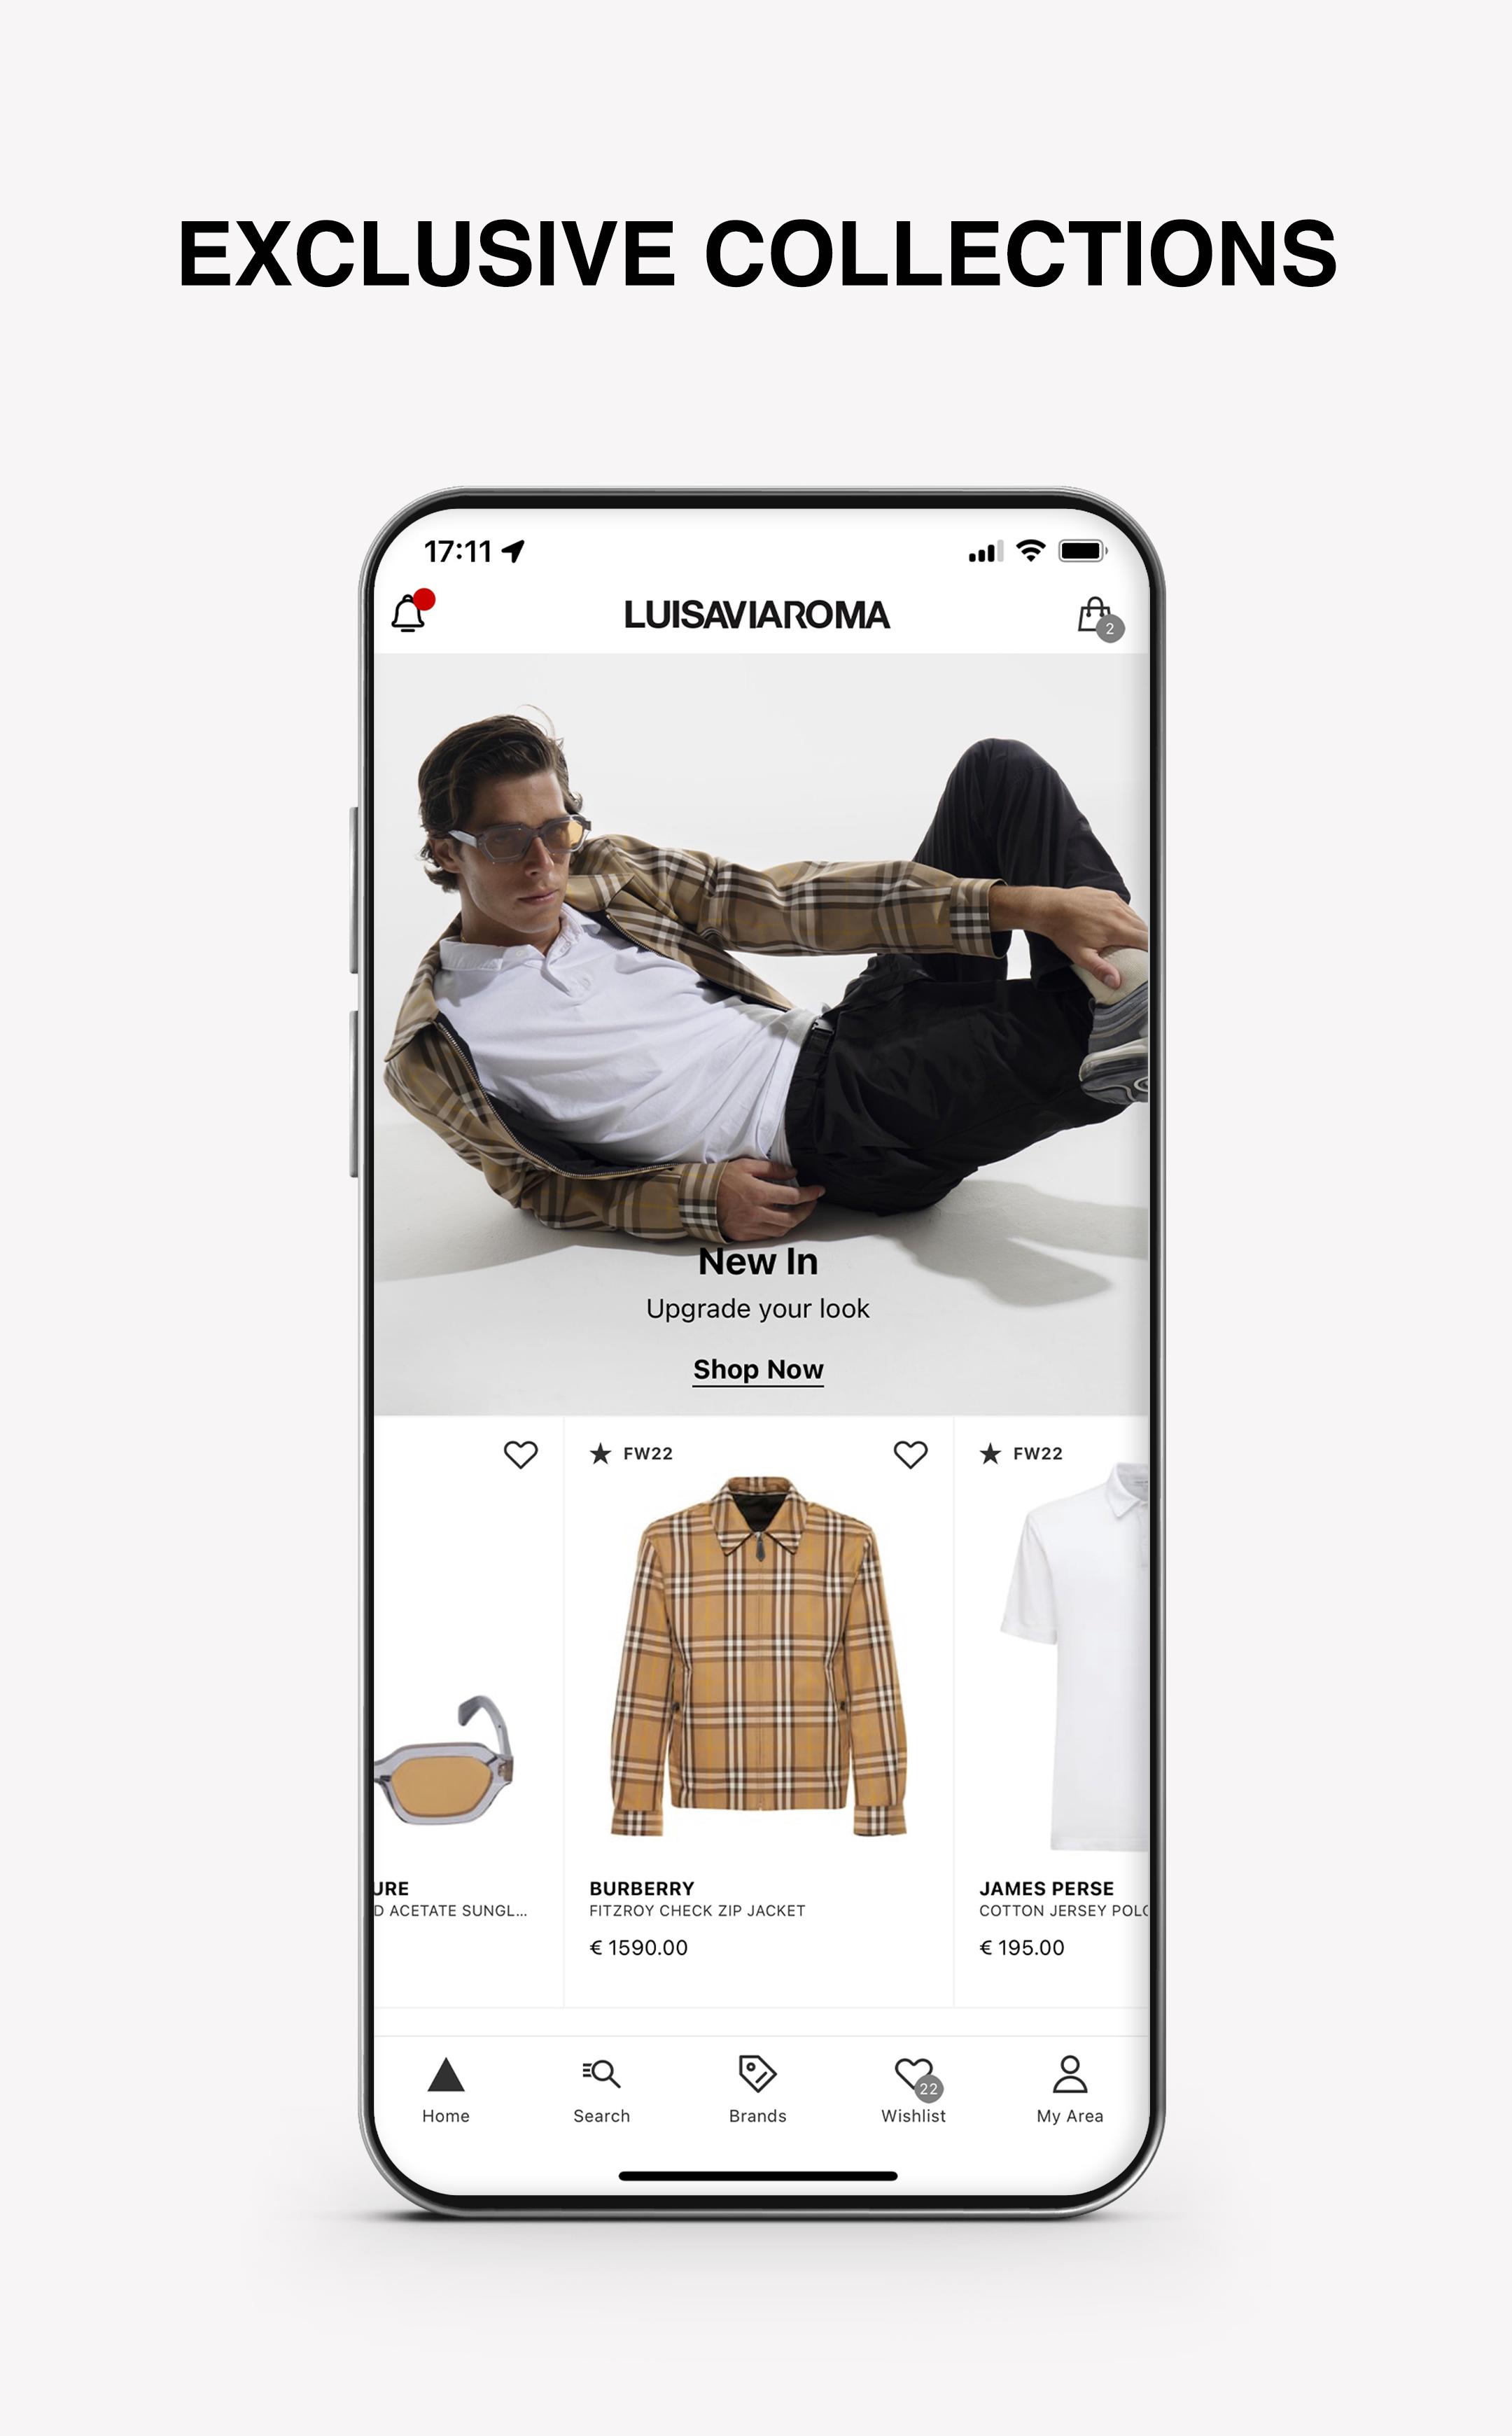 Tải Xuống Apk Luisaviaroma - Luxury Shopping Cho Android